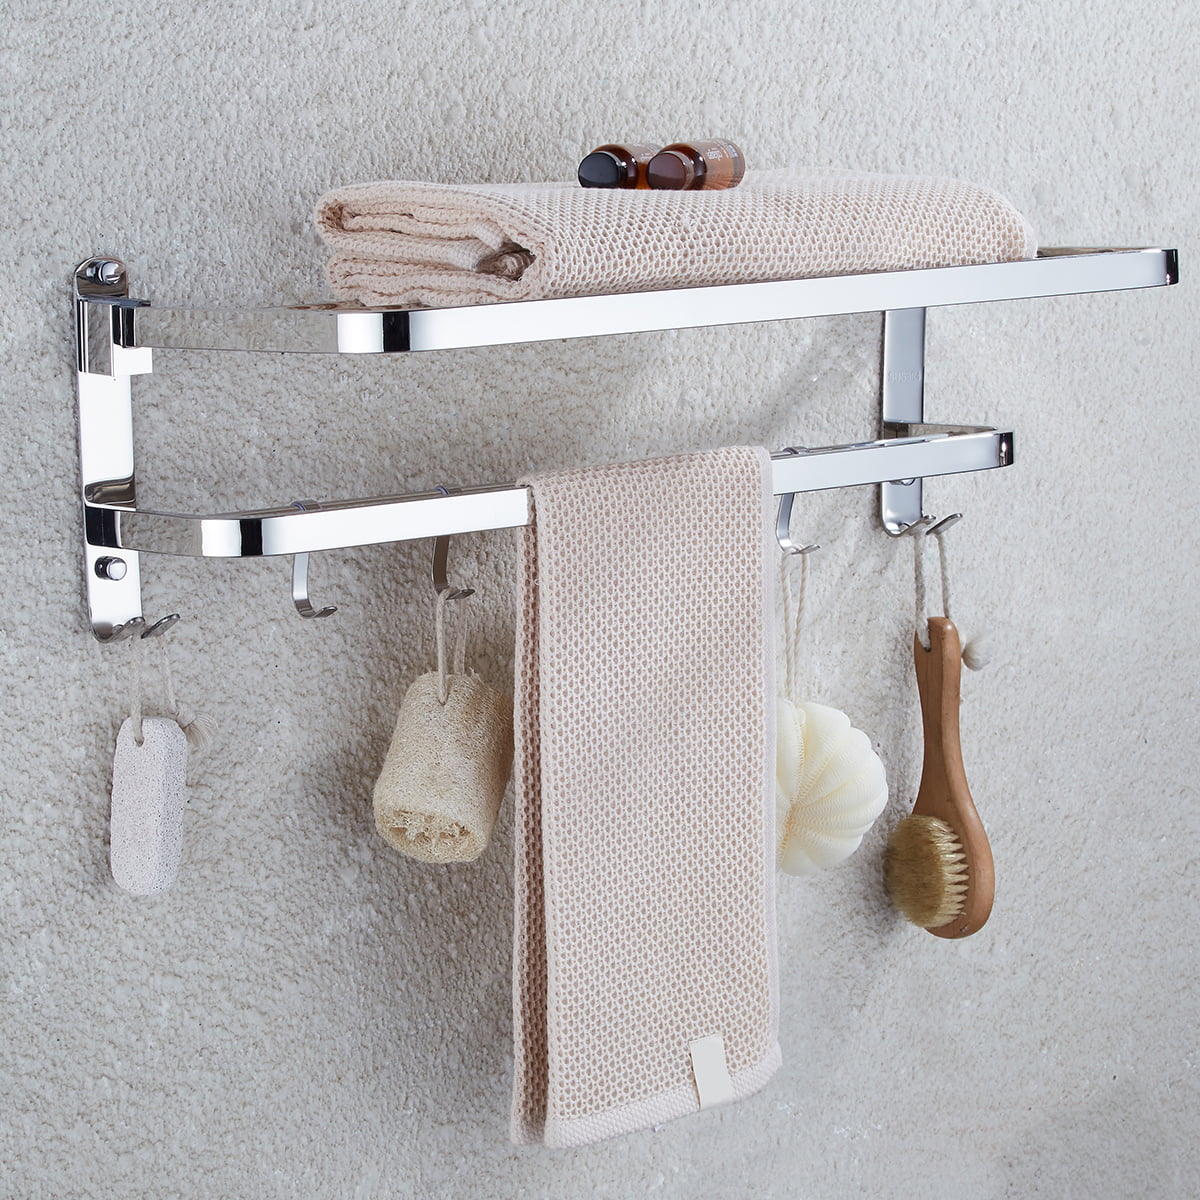 Details about   Wall Mounted Stainless Steel Bathroom Shelf Towel Holder Rack Shower Rail Bar 